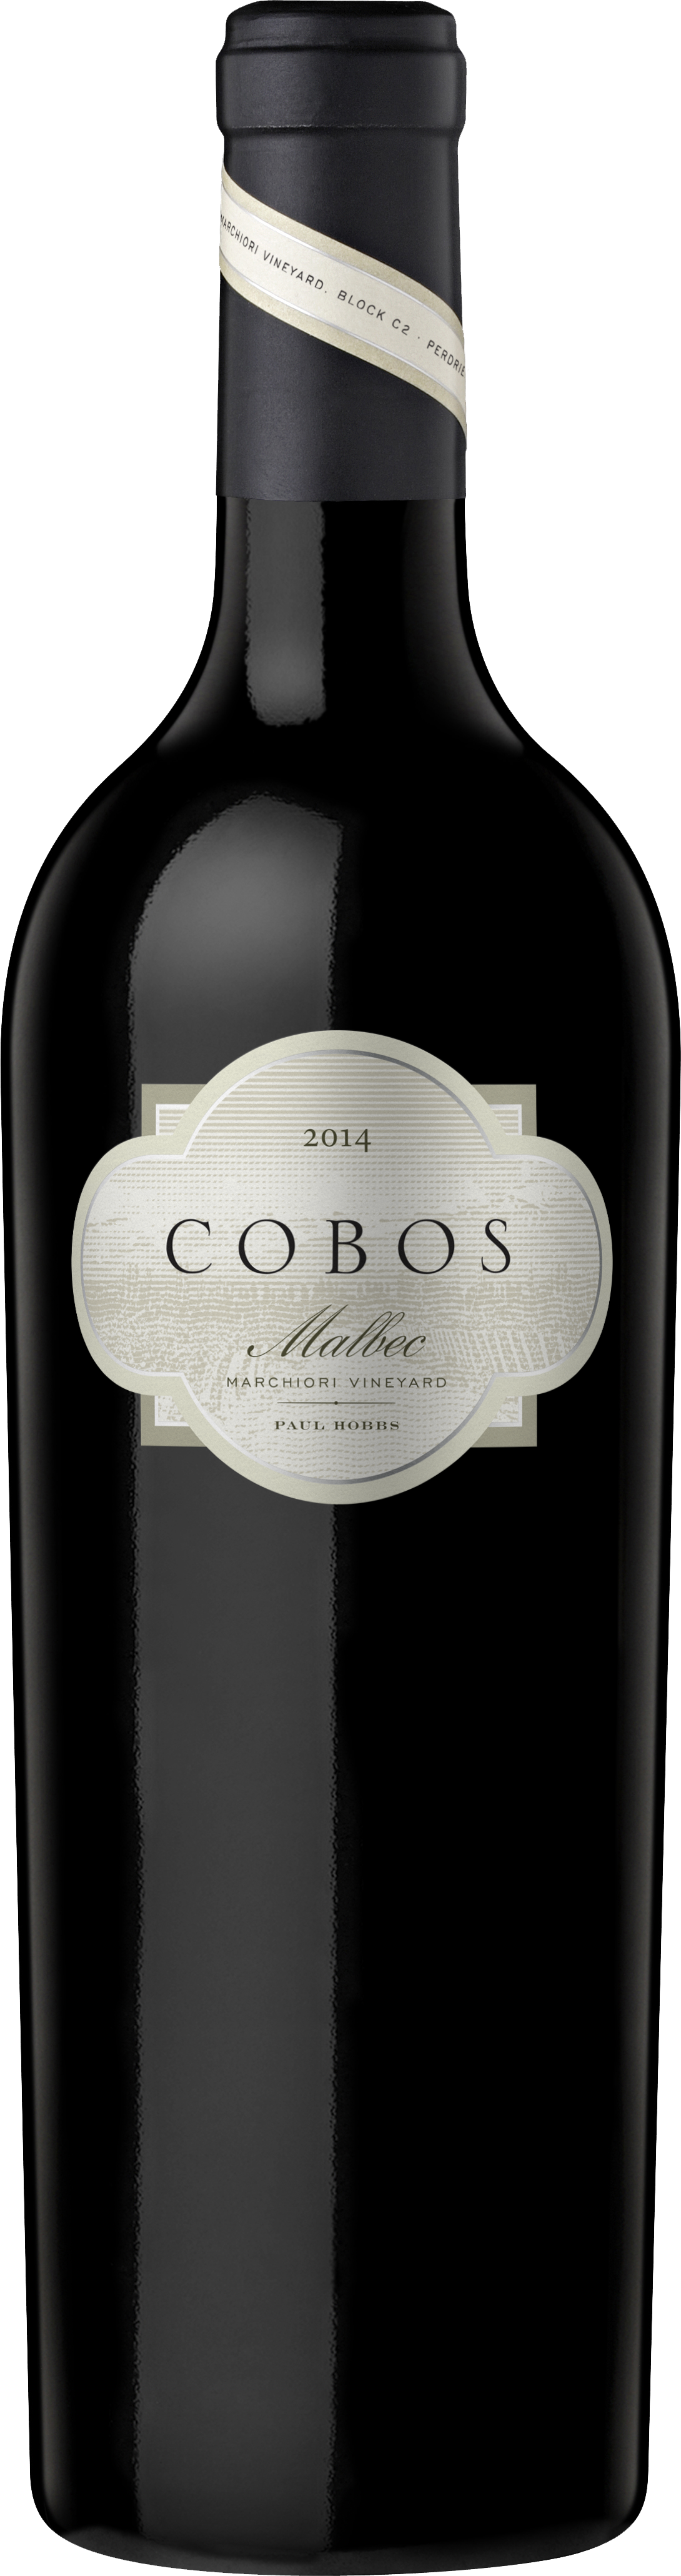 Cobos Malbec Argentine wine